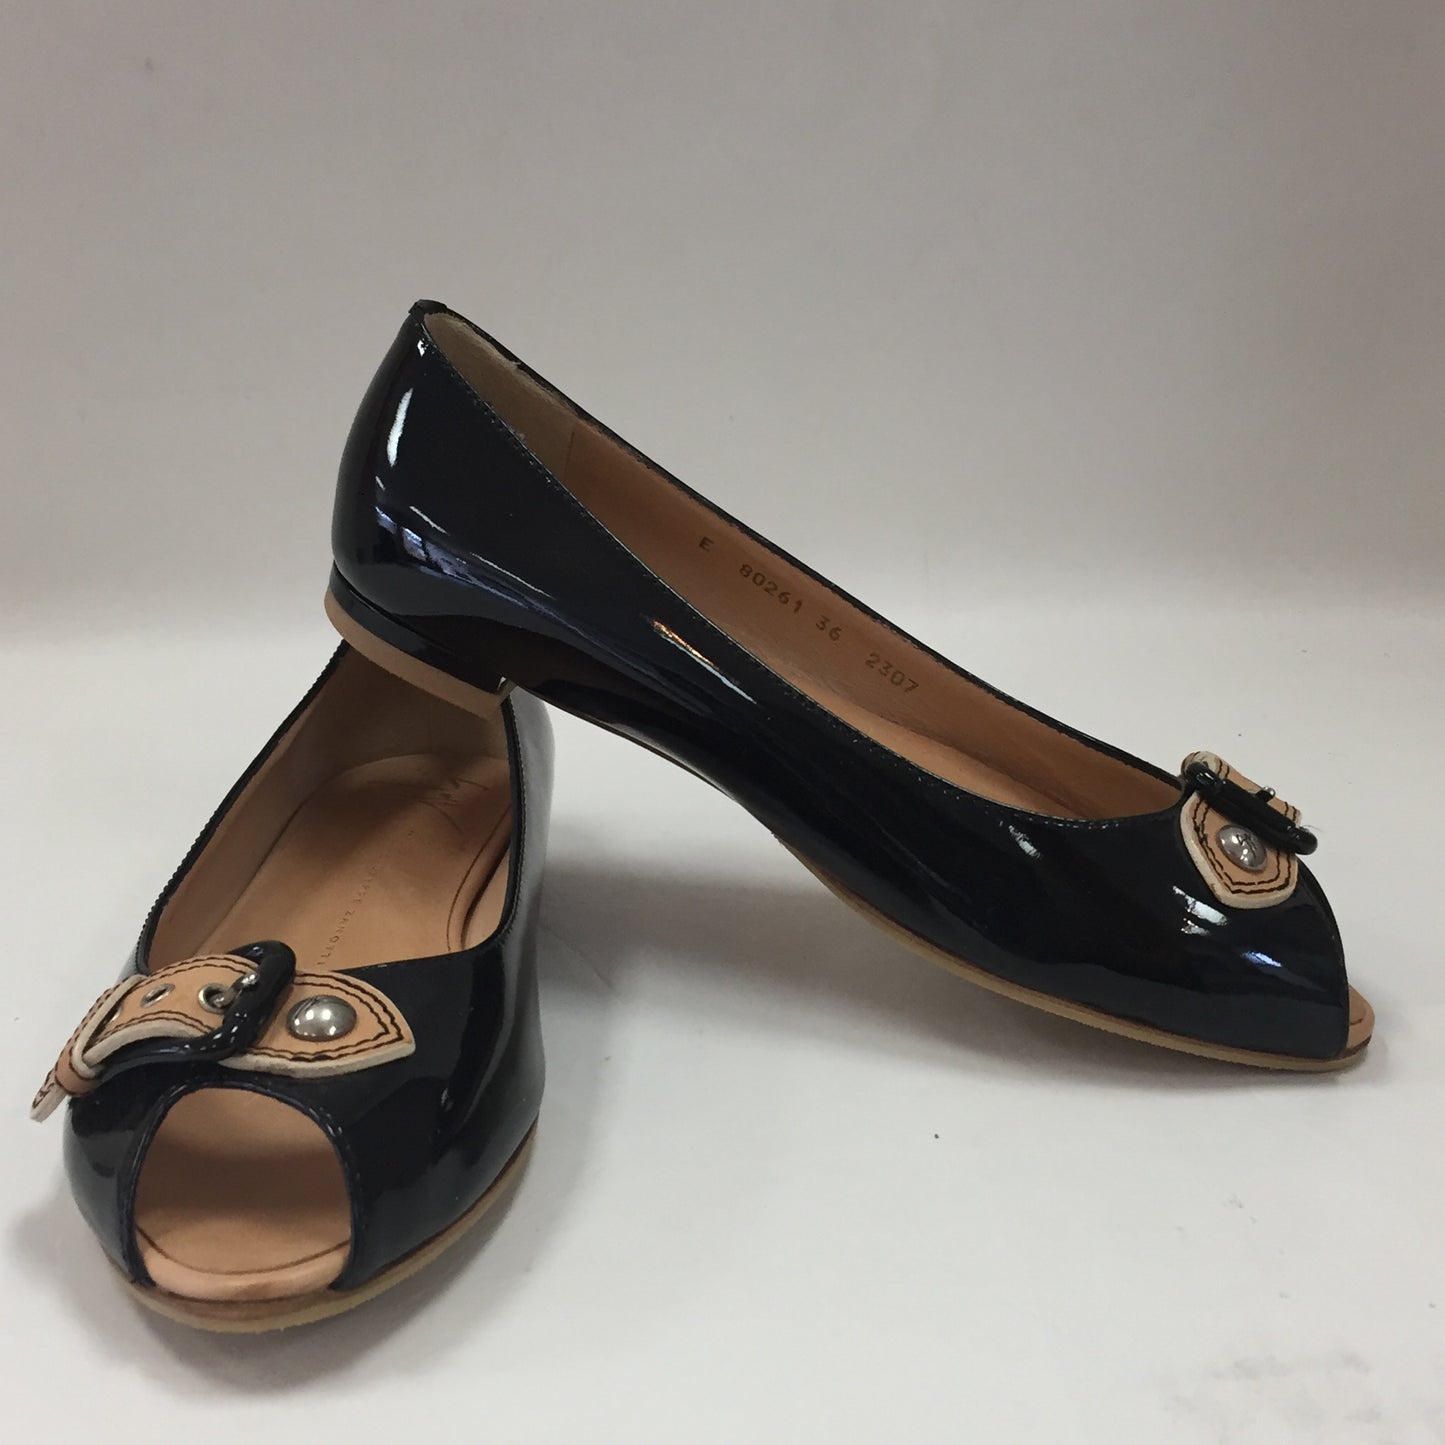 Authentic Giuseppe Zanotti Black Patent Leather Peep-Toe Flats Women's Size 6